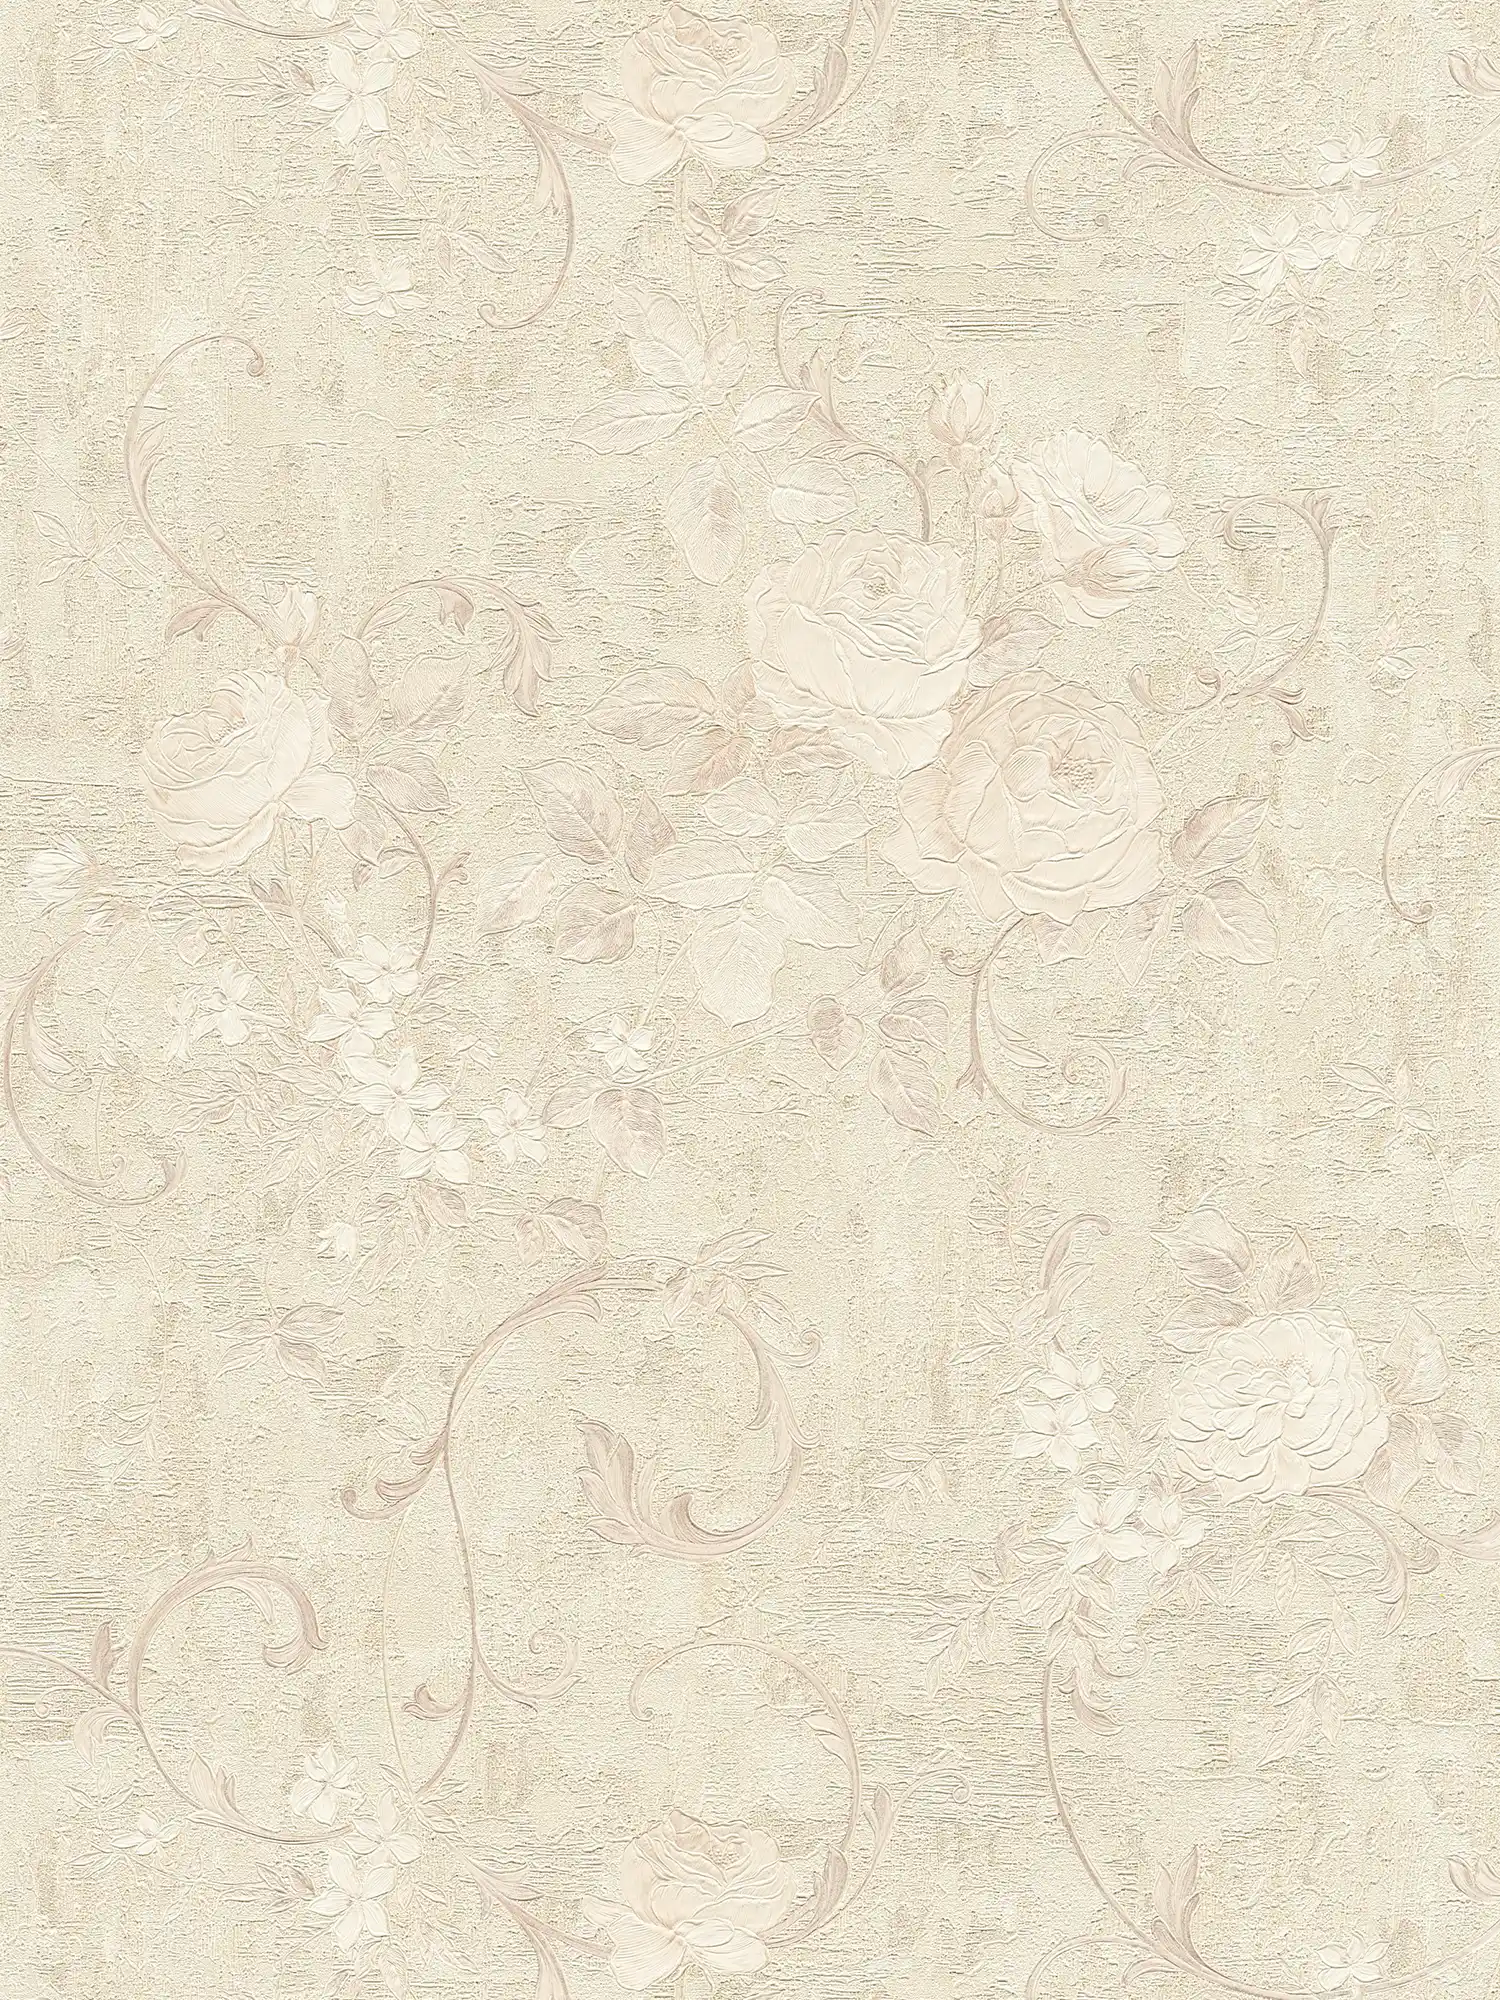 Wallpaper rose pattern & leaf tendrils - beige, cream, grey
